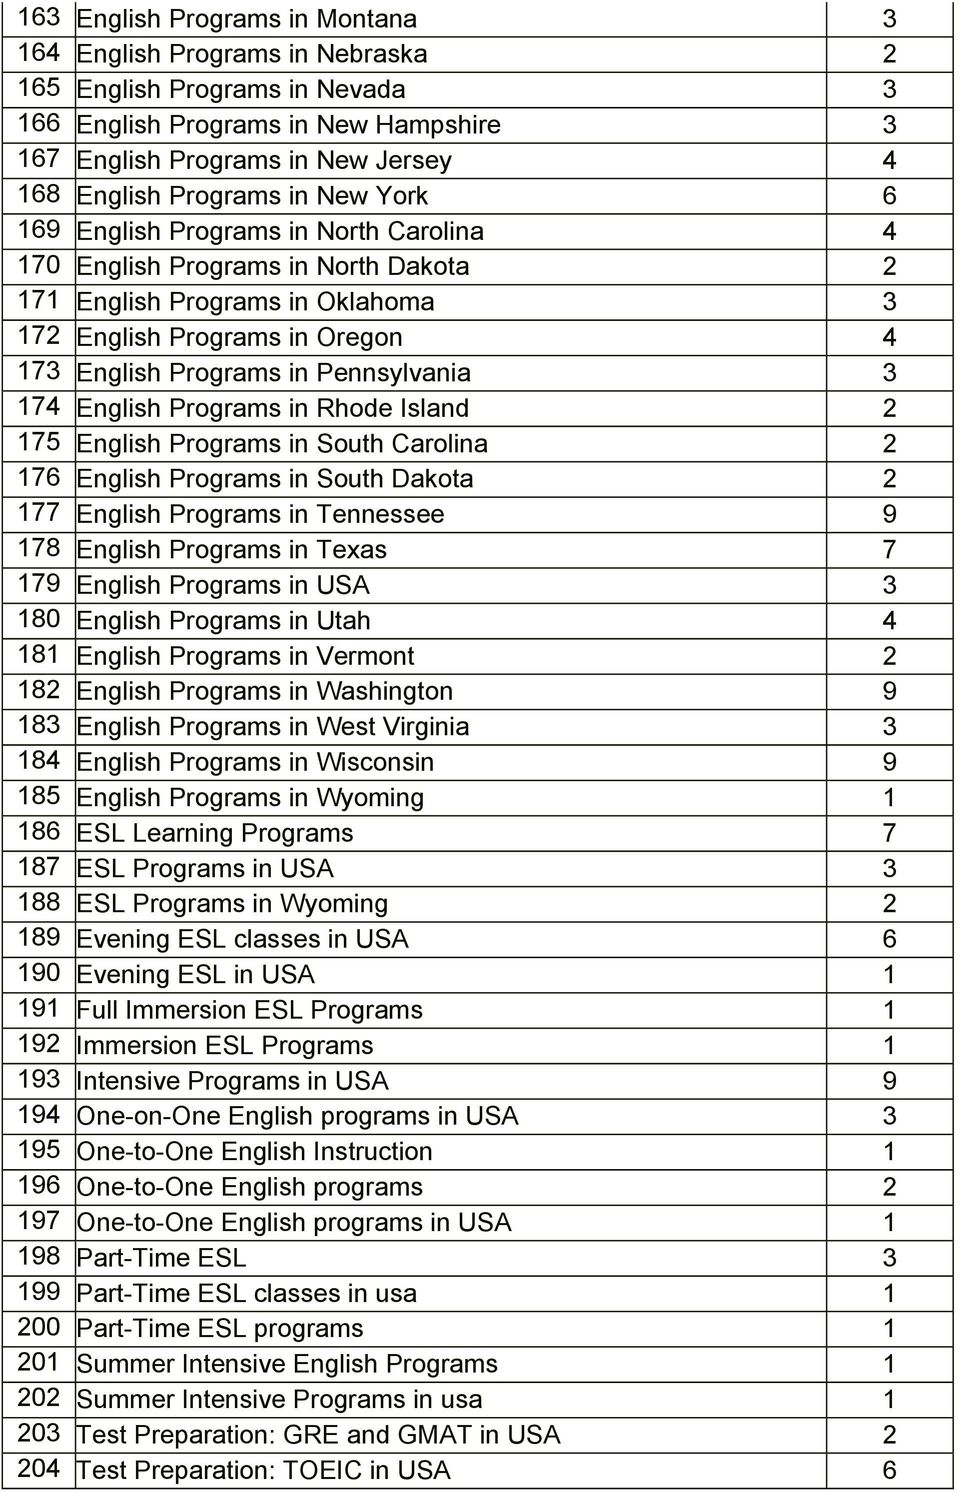 3 174 English Programs in Rhode Island 2 175 English Programs in South Carolina 2 176 English Programs in South Dakota 2 177 English Programs in Tennessee 9 178 English Programs in Texas 7 179